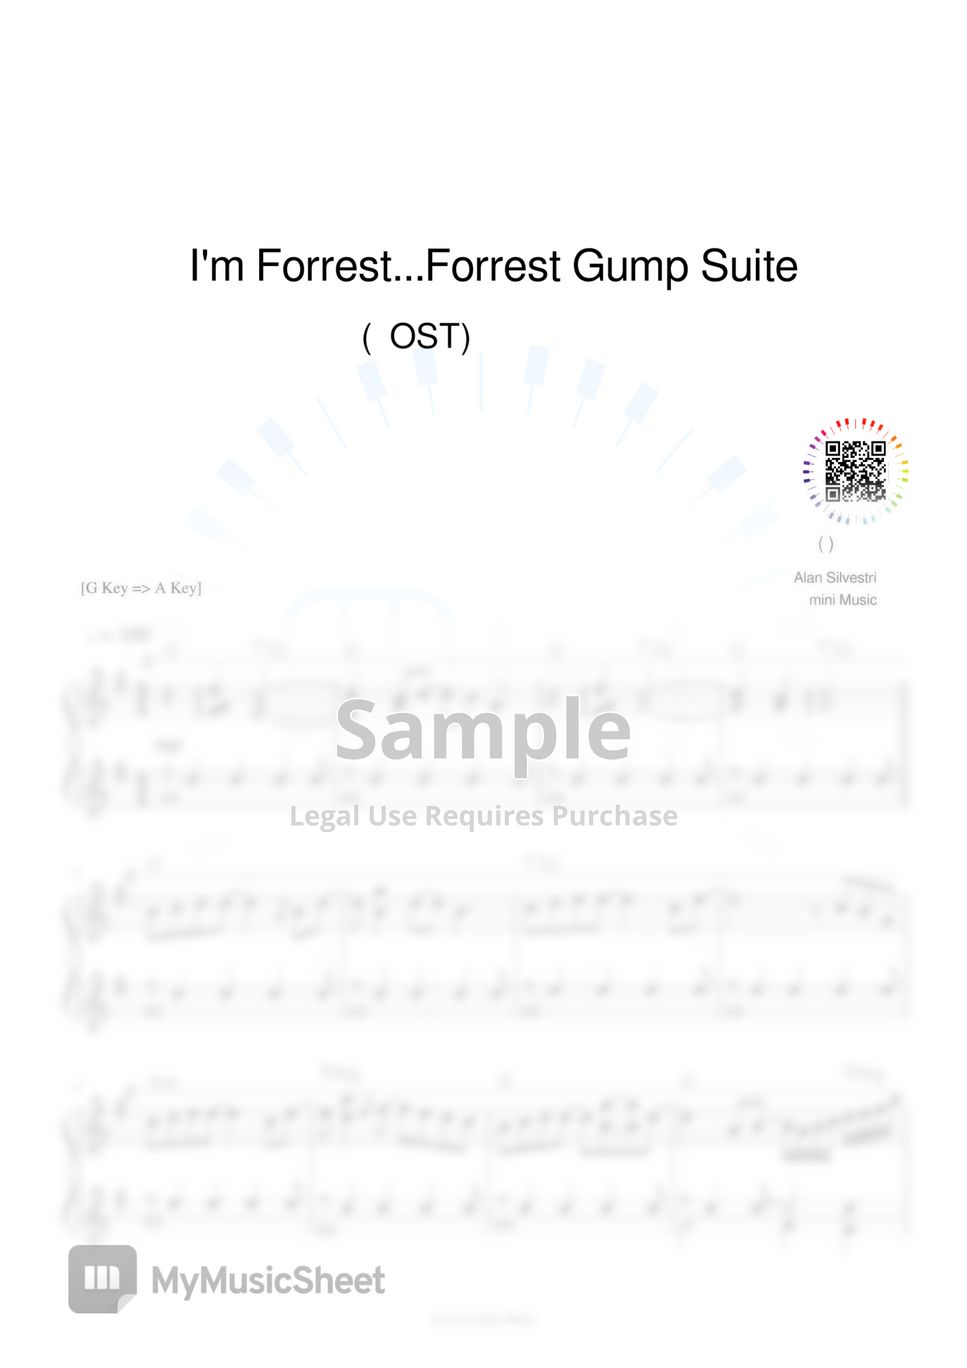 Forrest Gump OST - I'm Forrest... Forrest Gump (Forrest Gump OST) by mini Music